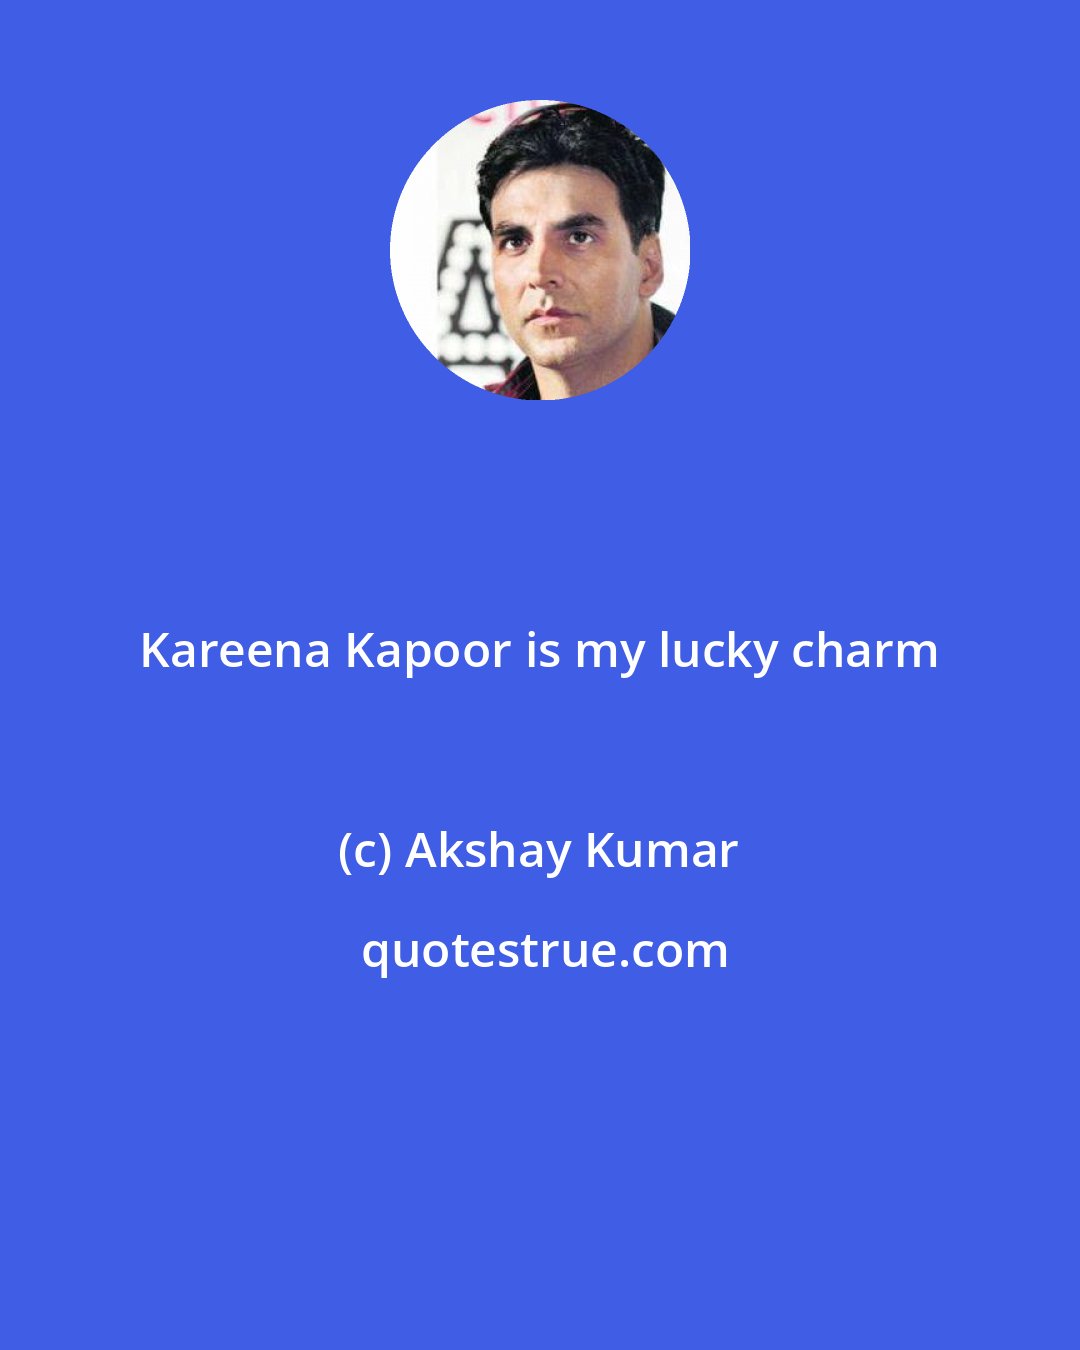 Akshay Kumar: Kareena Kapoor is my lucky charm